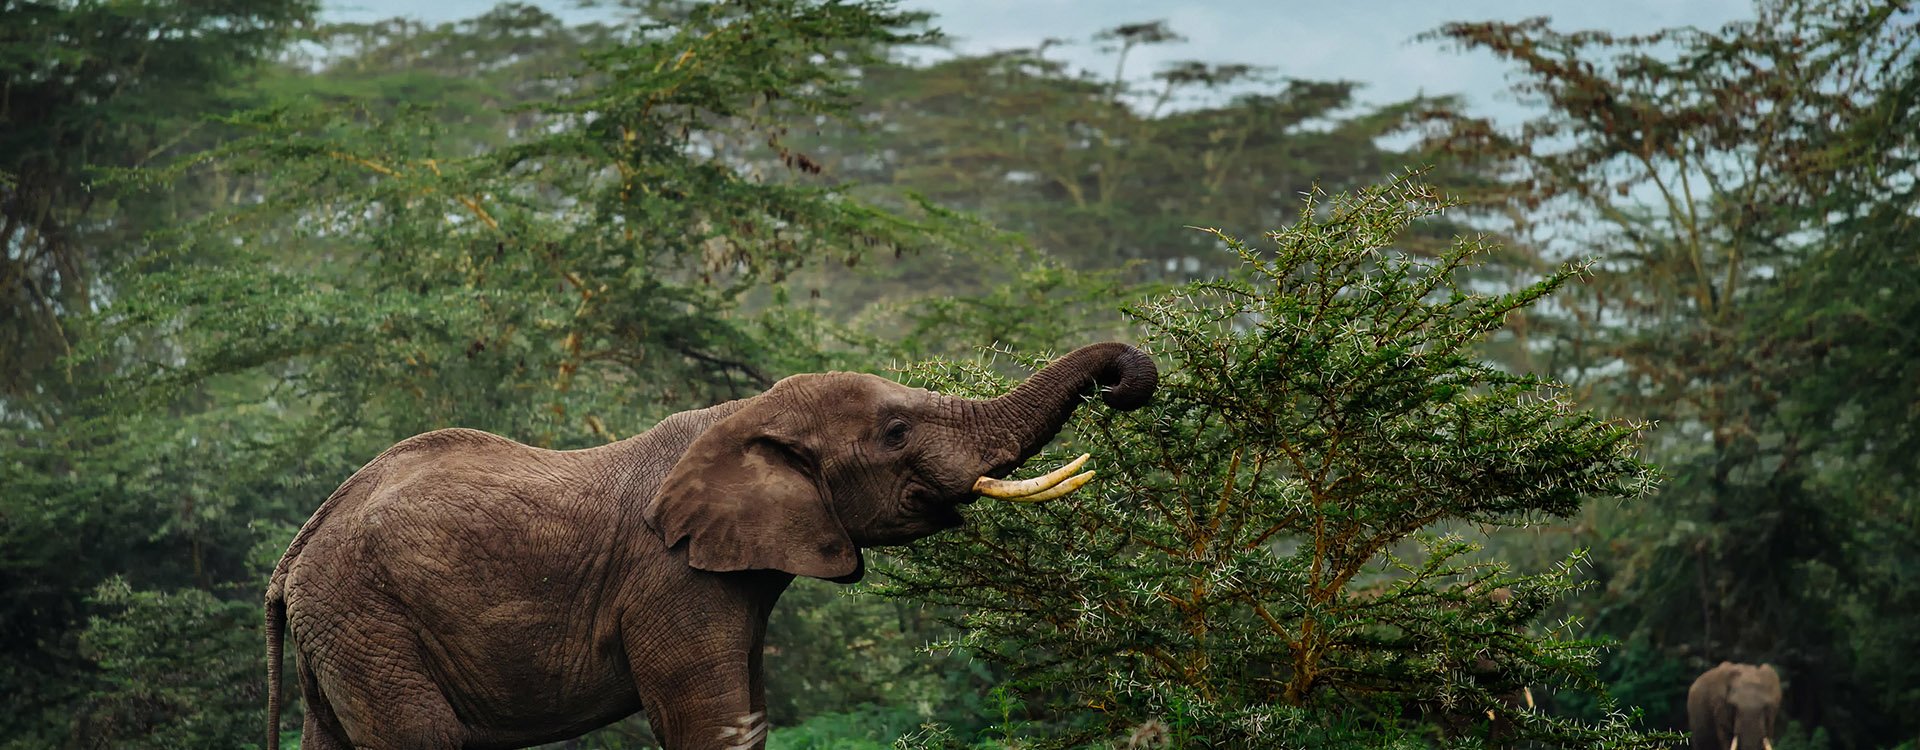 elephants lift trunk in the forest near Bangkok Thailand